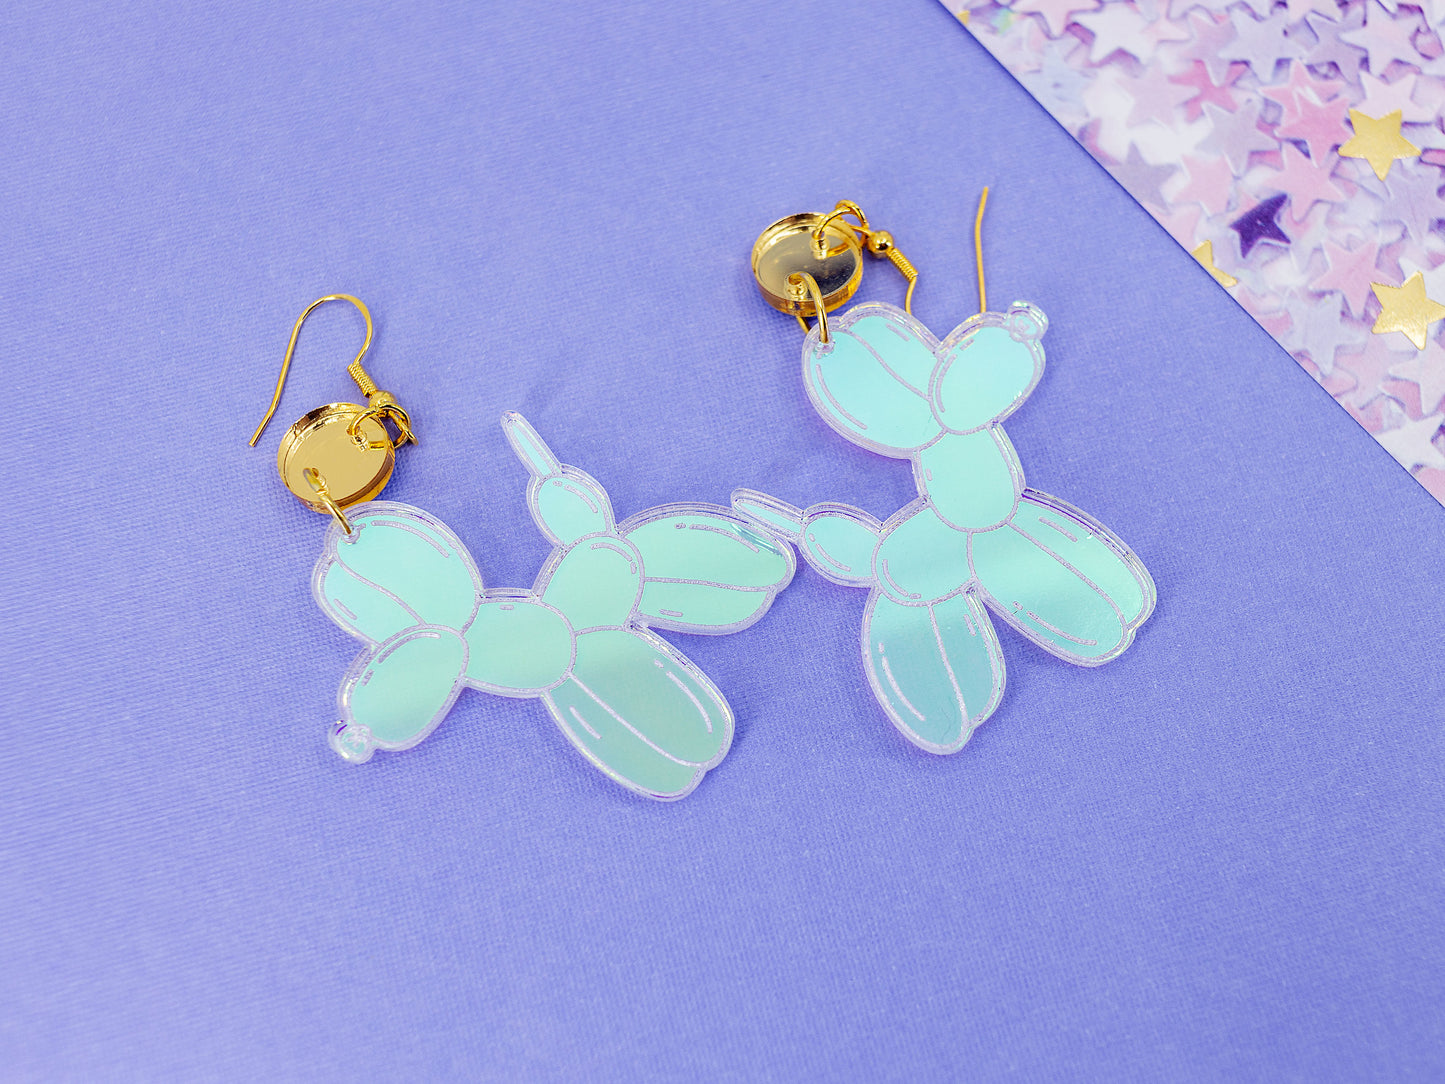 Iridescent Balloon Dog Earrings - Cute Acrylic Earrings - Novelty Earrings - Birthday Earrings